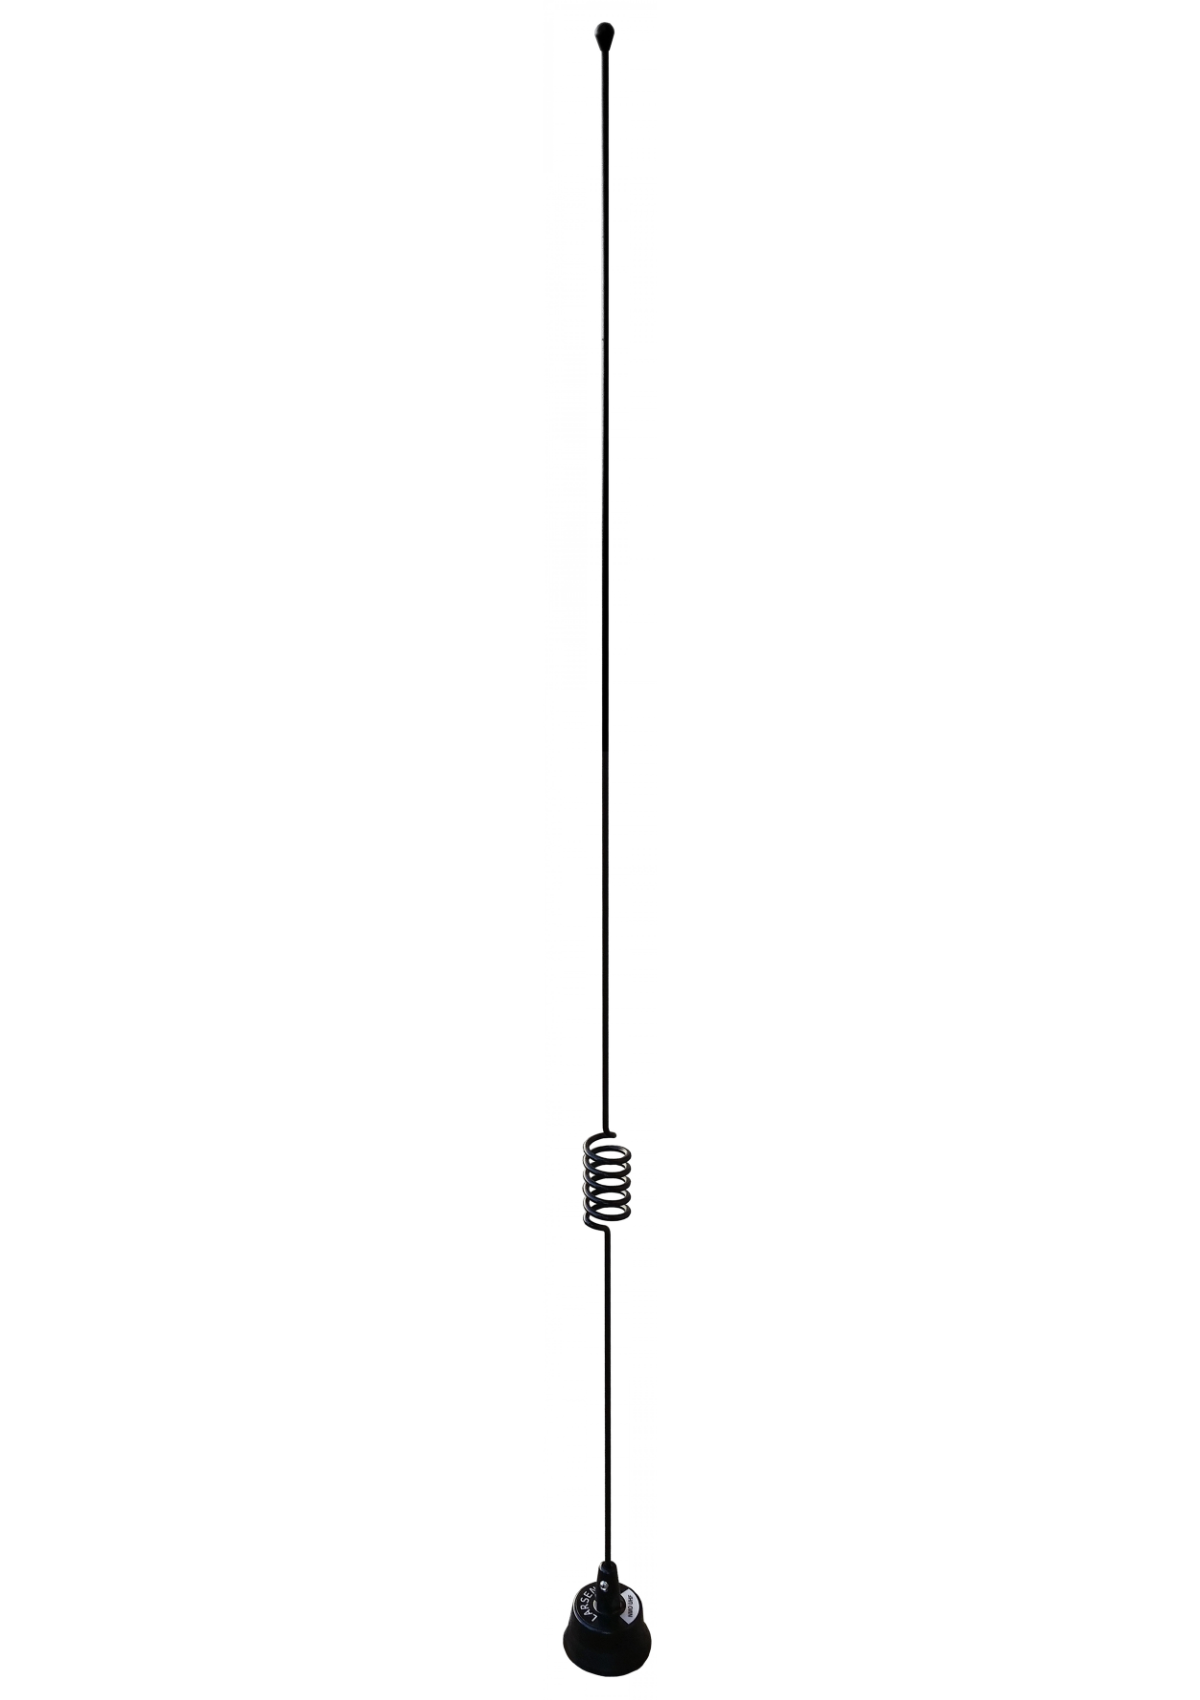 Pulse Larsen LM450C UHF 450-470 MHz Antena de látigo y bobina base - Increíble